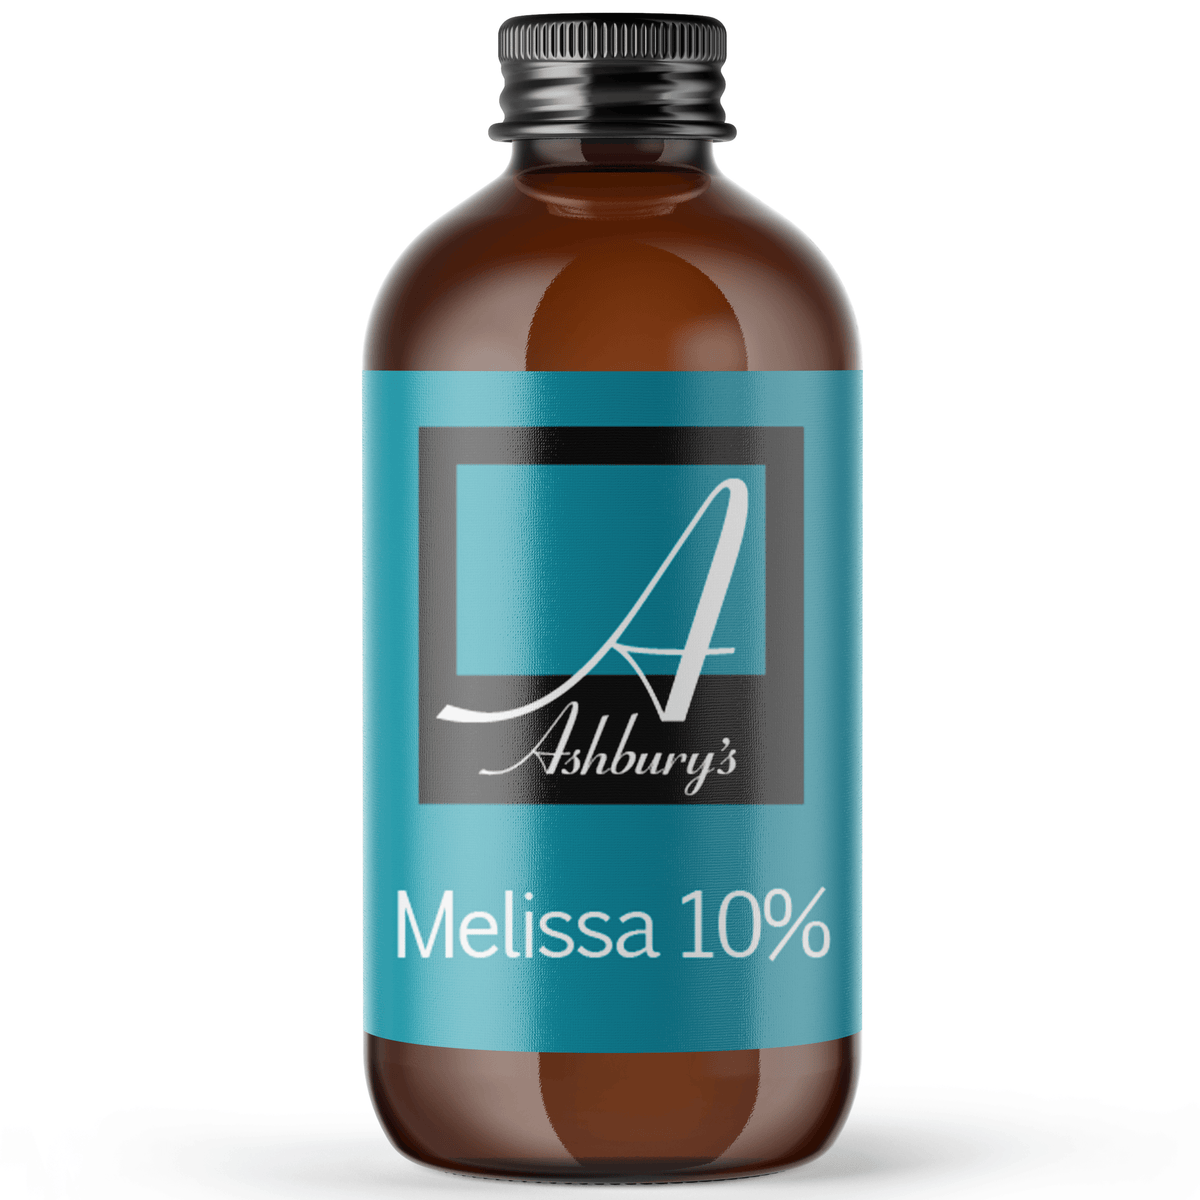 Melissa (Melissa officinalis), 10% in Jojoba